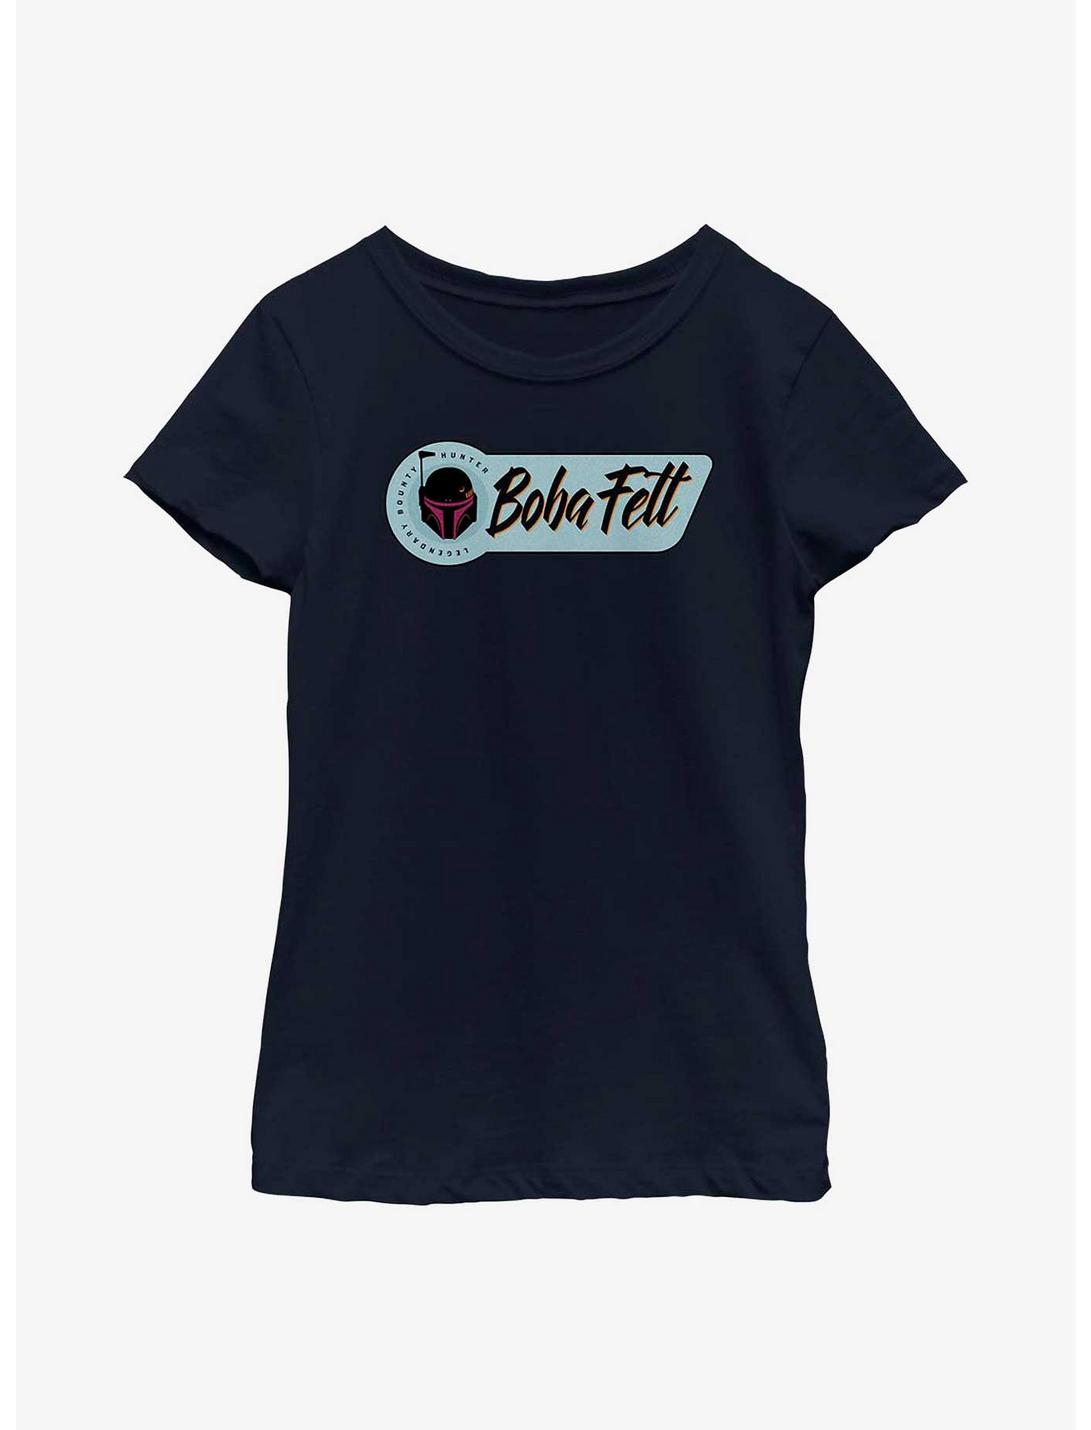 Star Wars: The Book Of Boba Fett Legendary Bounty Hunter Badge Youth Girls T-Shirt, NAVY, hi-res